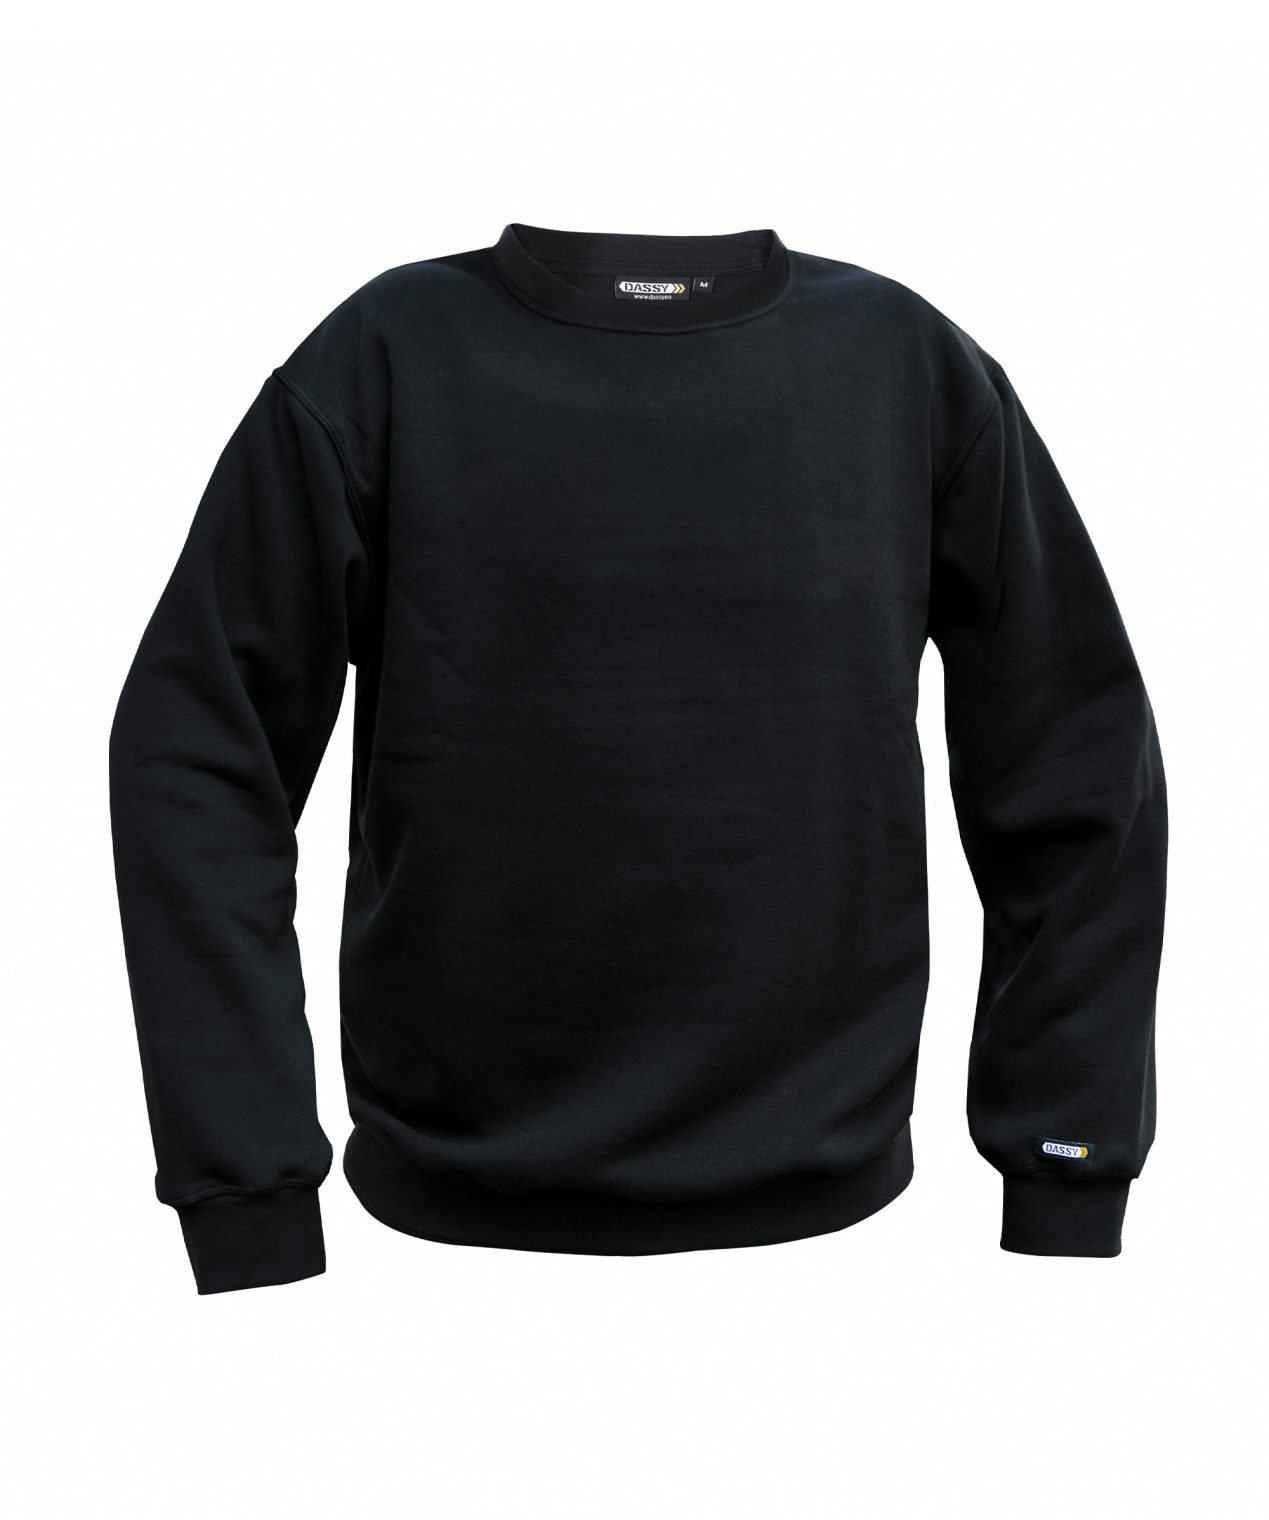 lionel sweatshirt black front